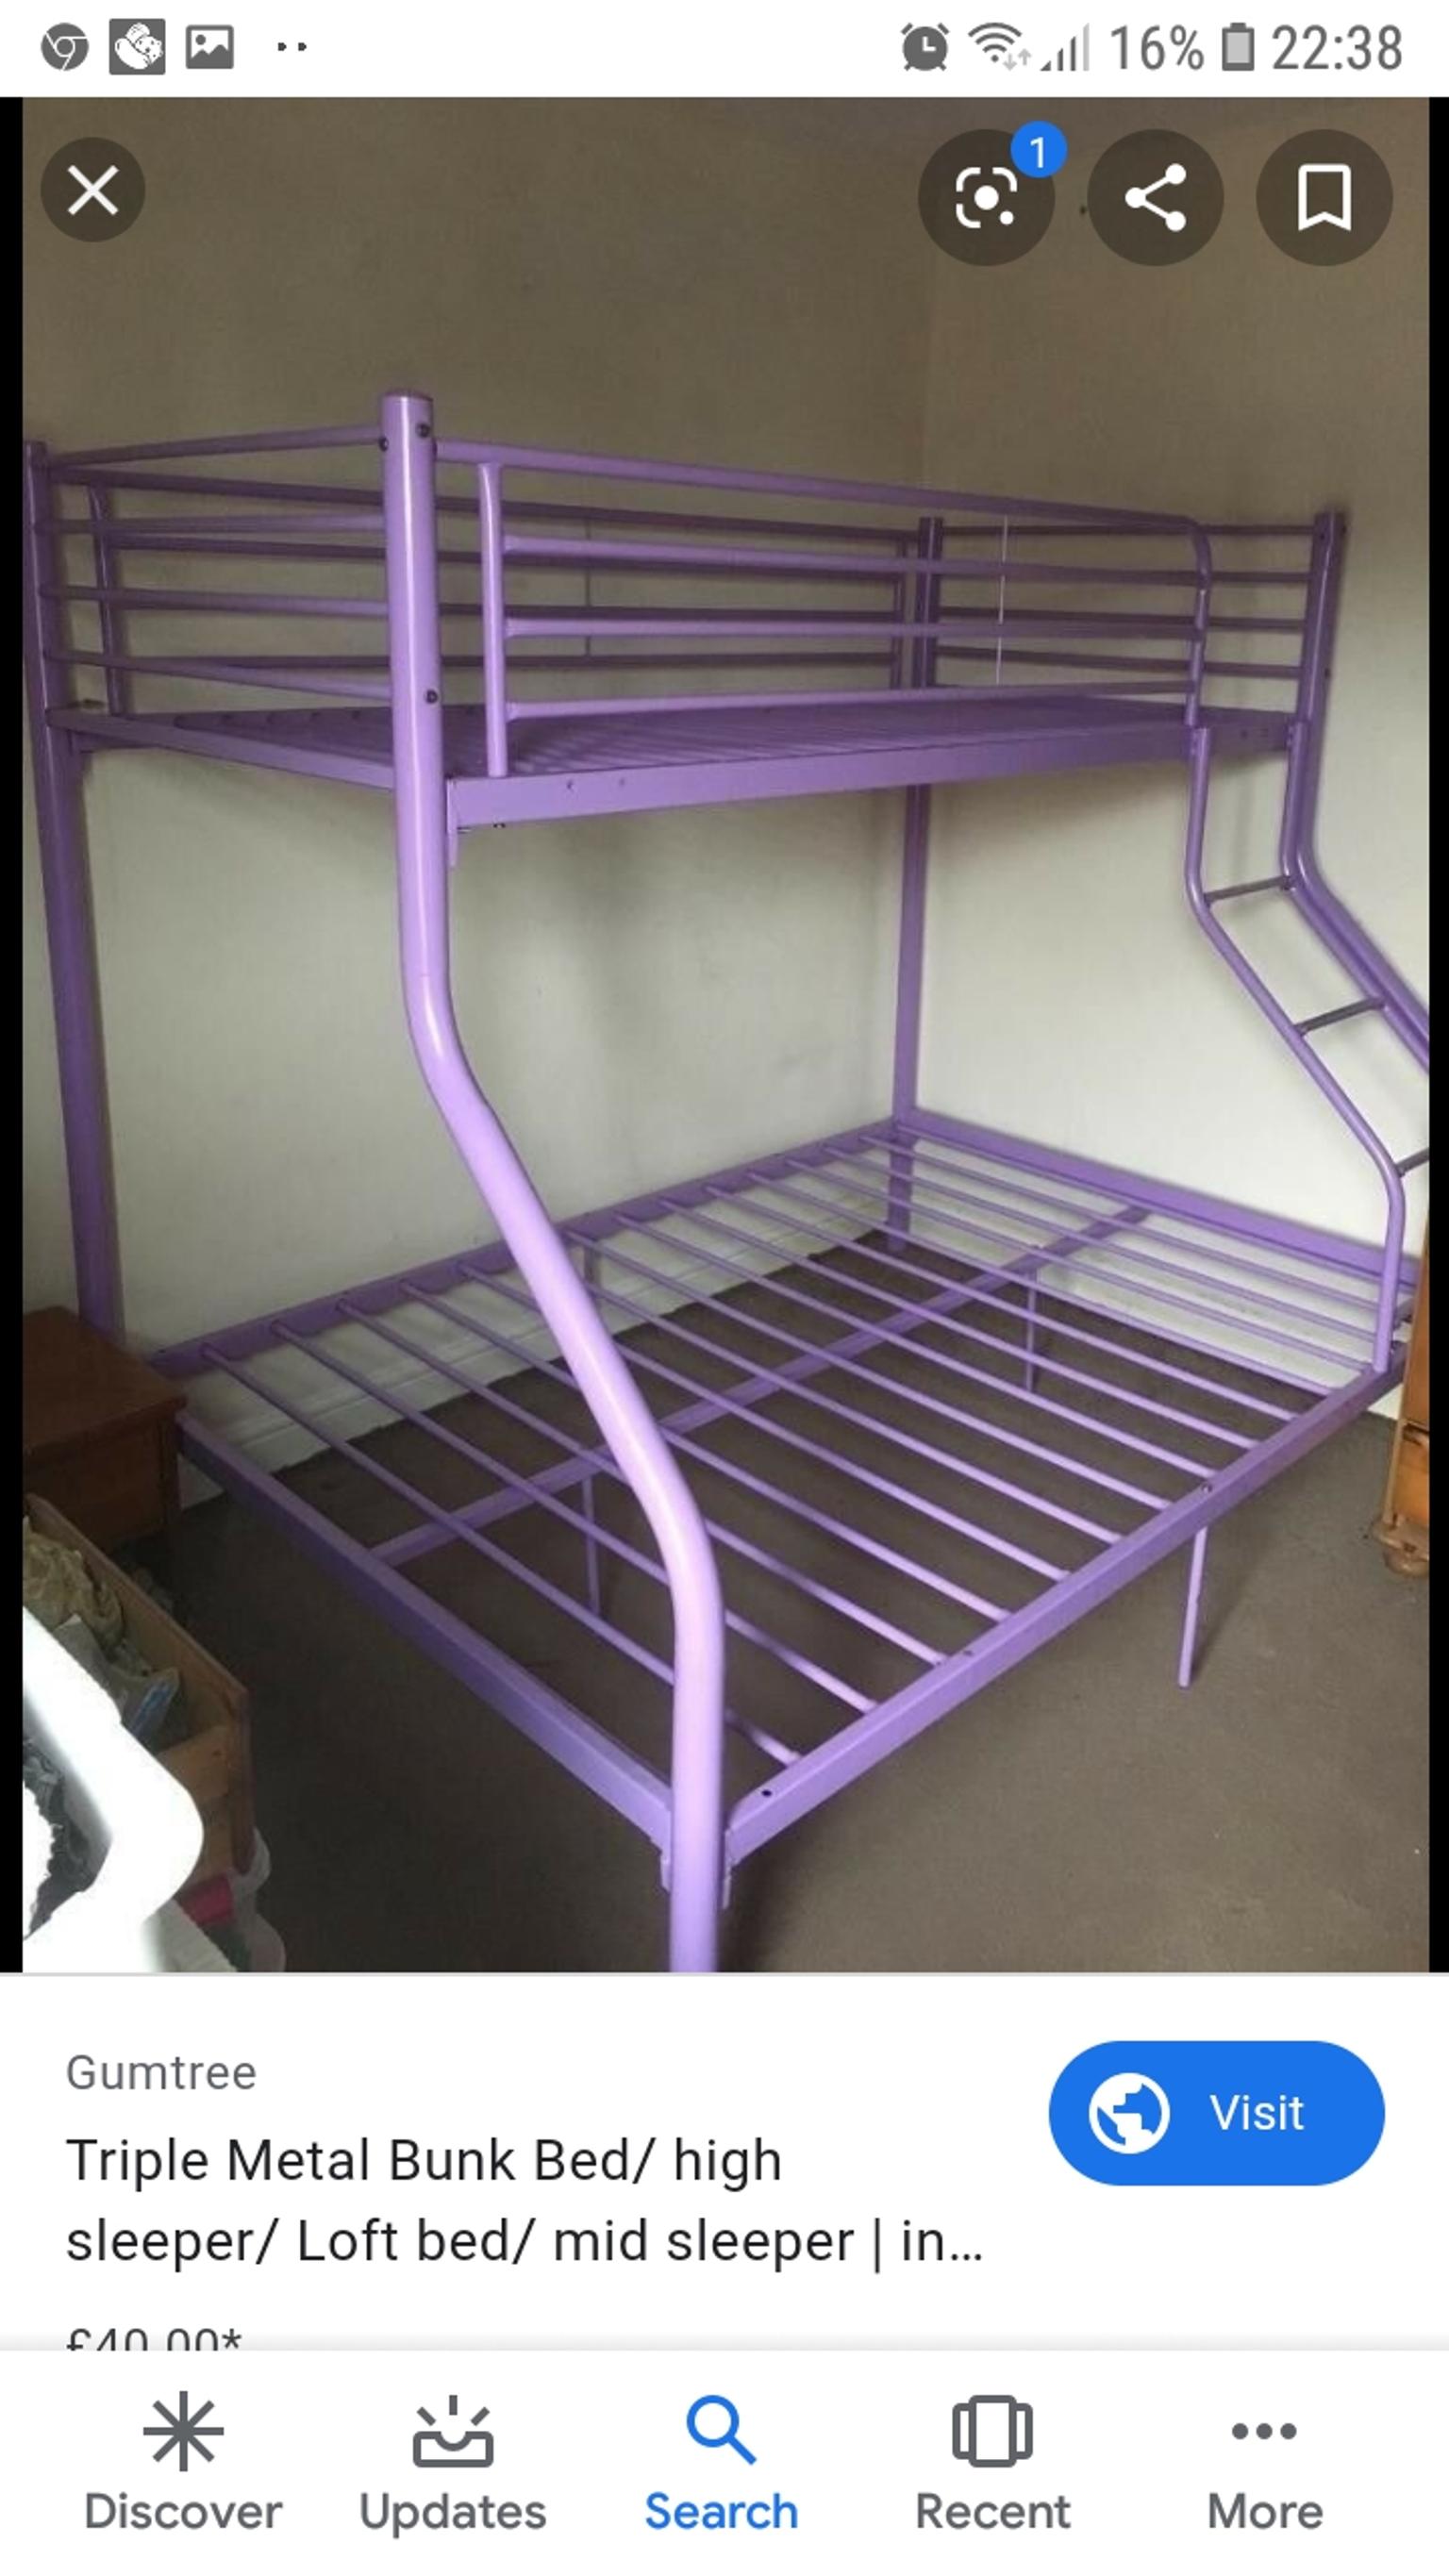 purple bunk beds